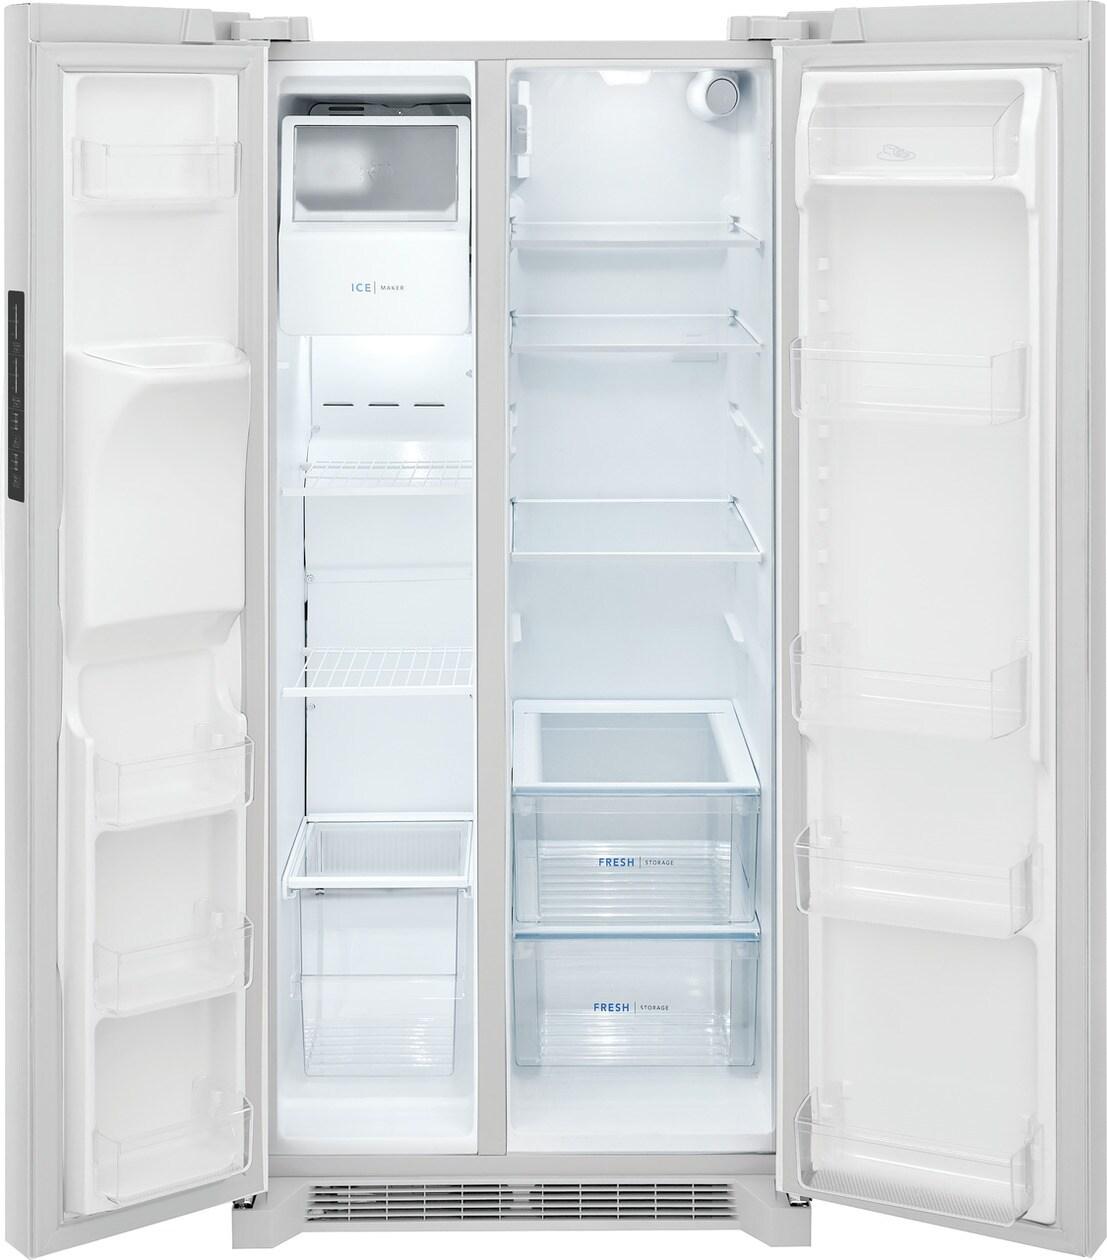 Frigidaire 22.3 Cu. Ft. 33" Standard Depth Side by Side Refrigerator